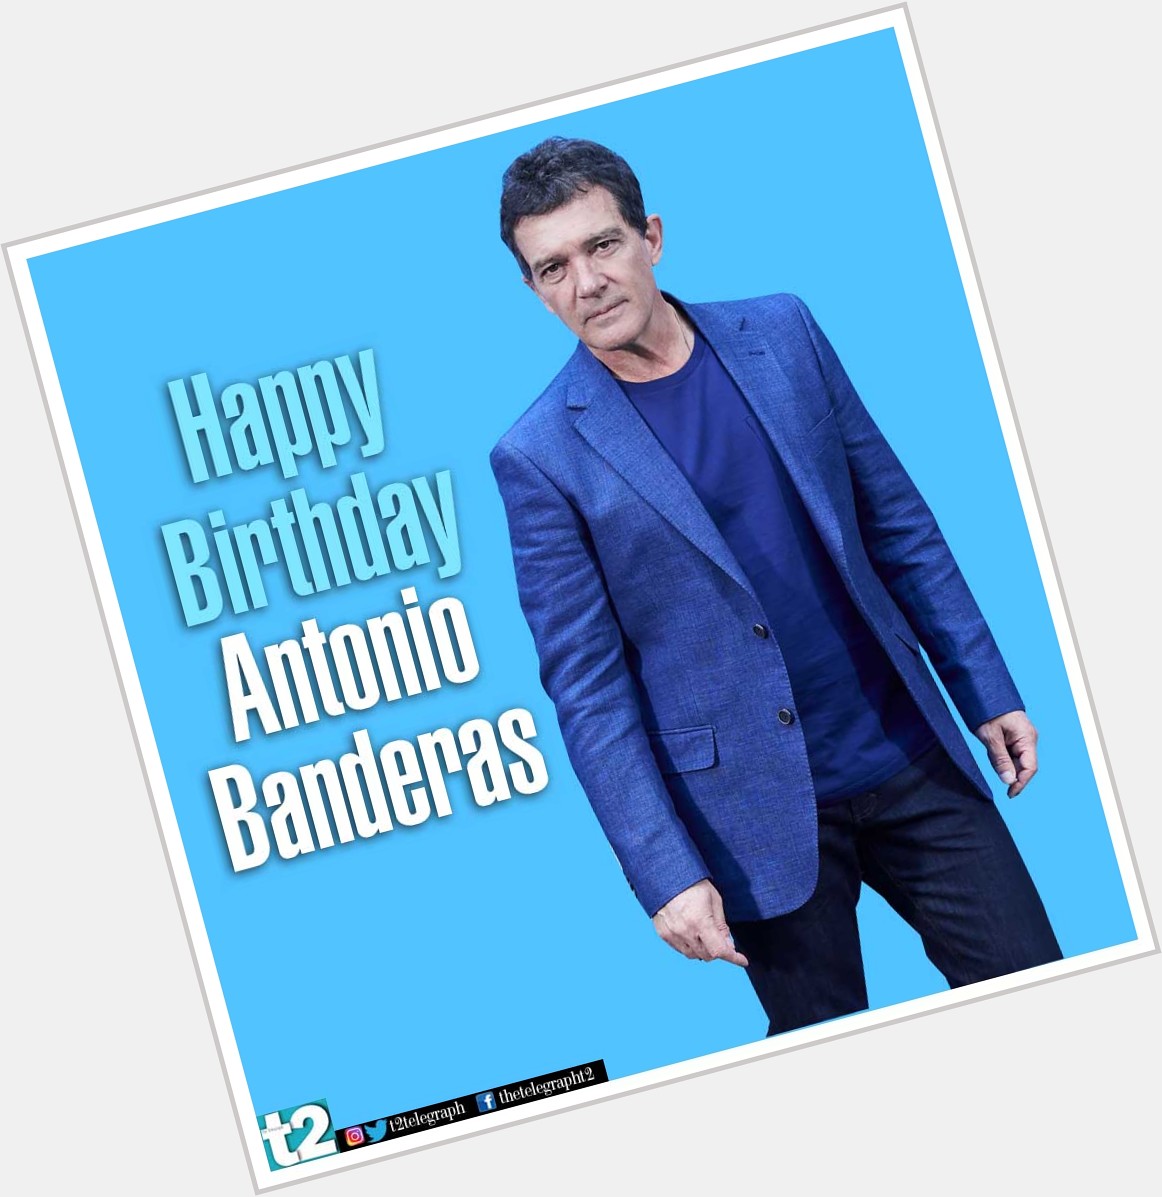 He\s aged like fine wine! Happy birthday, Antonio Banderas! 